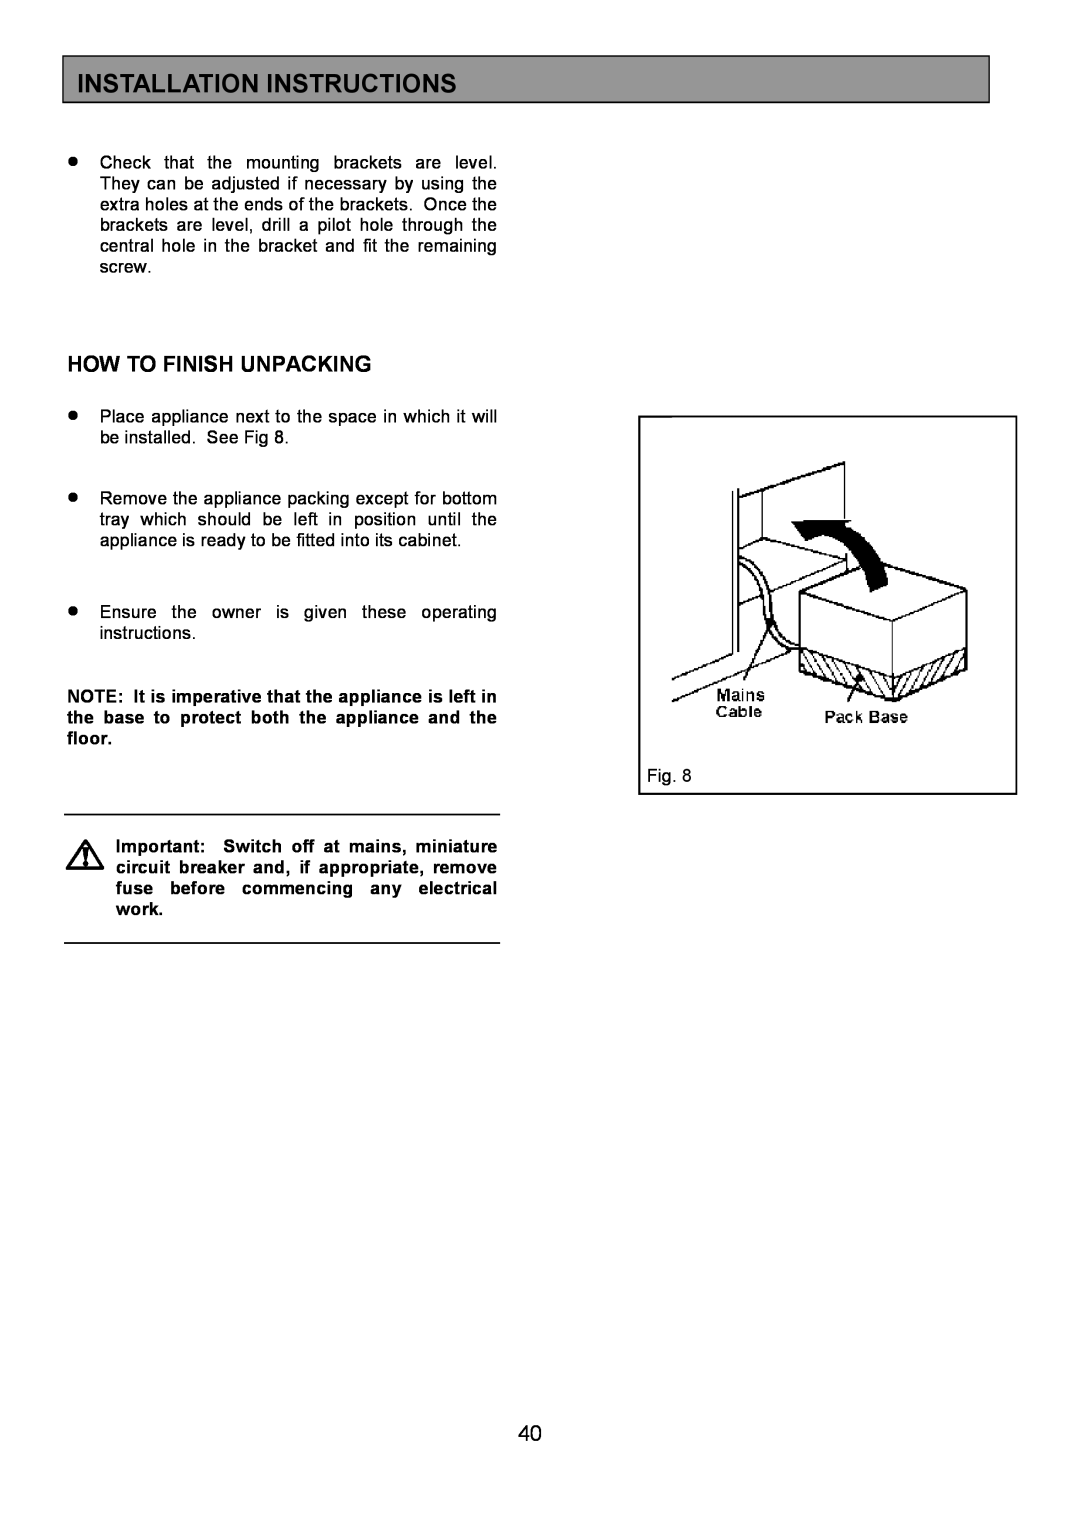 AEG 3210 BU installation instructions How To Finish Unpacking, Installation Instructions 